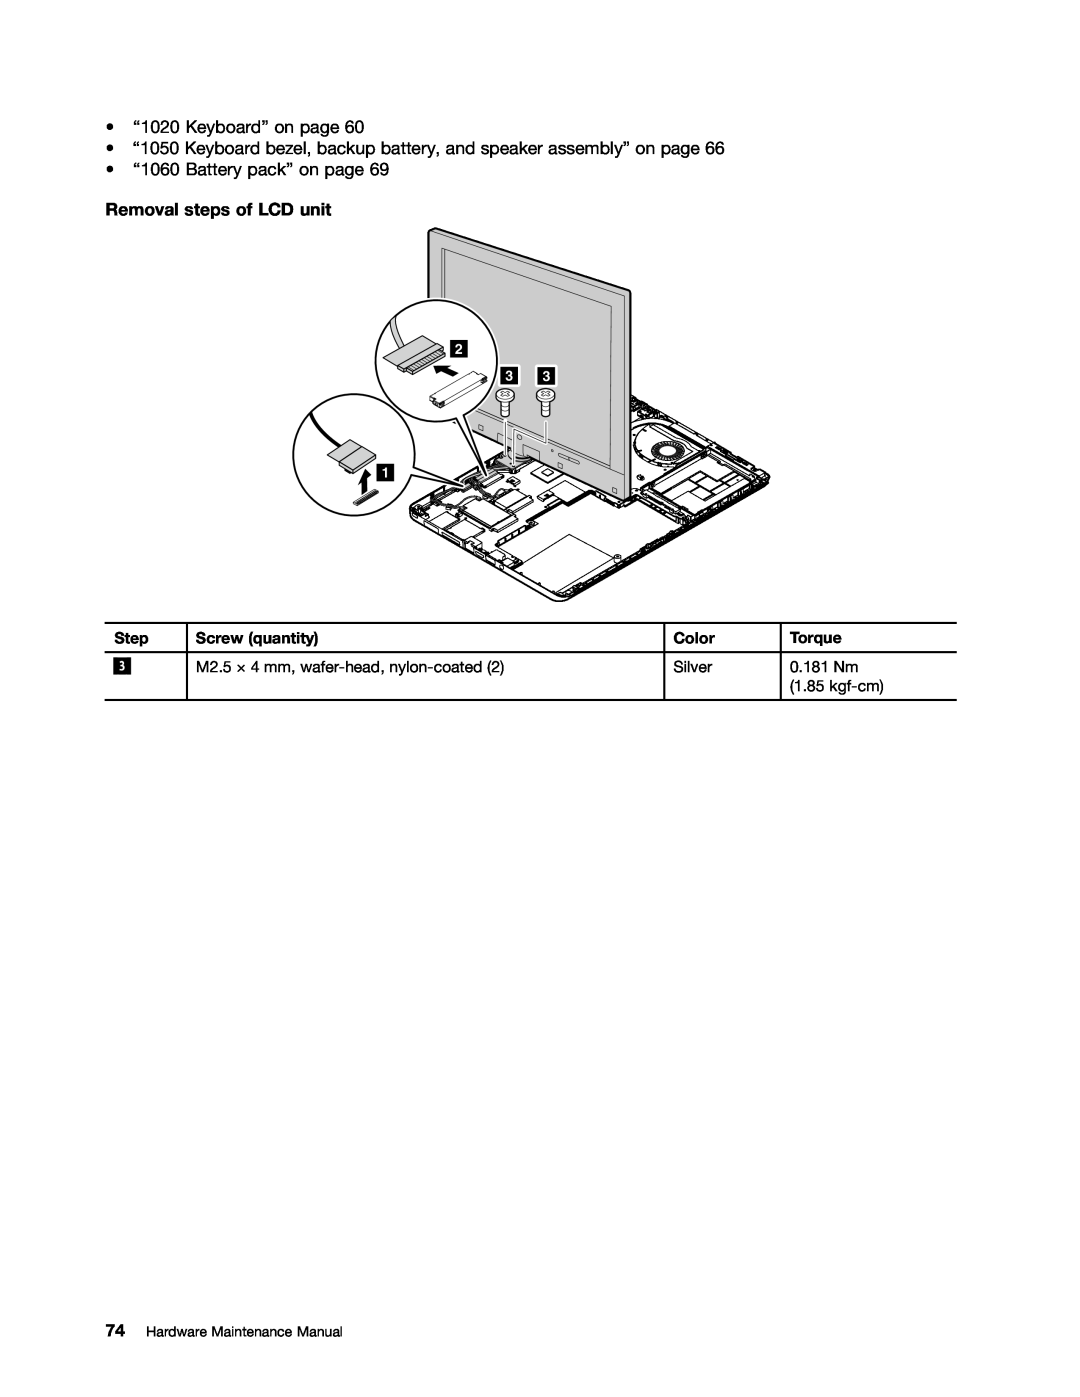 Lenovo S230U, 33472YU manual Removal steps of LCD unit, Step, Screw quantity, Color, Torque, Hardware Maintenance Manual 